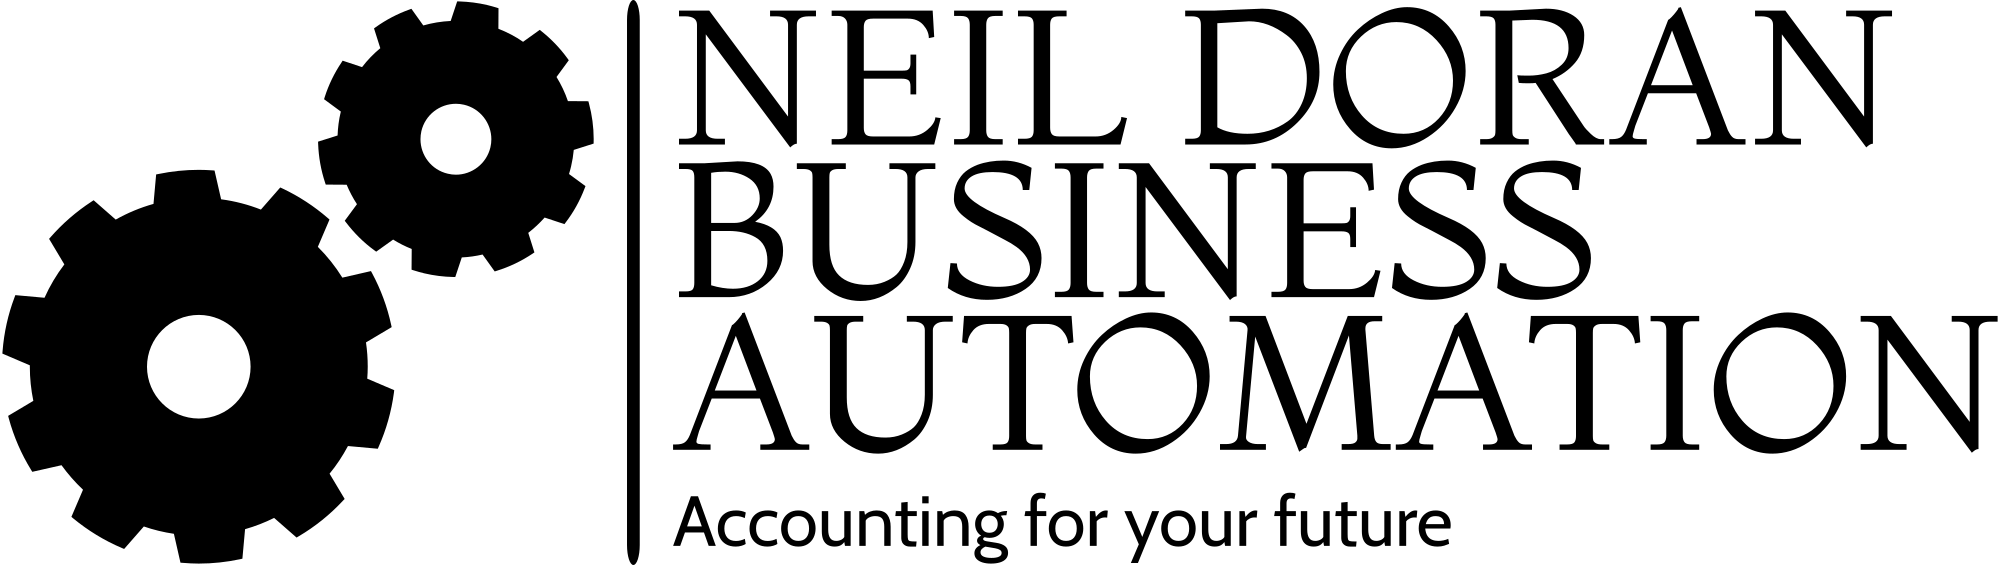 neil-doran-business-automation-high-resolution-logo-black-on-transparent-background